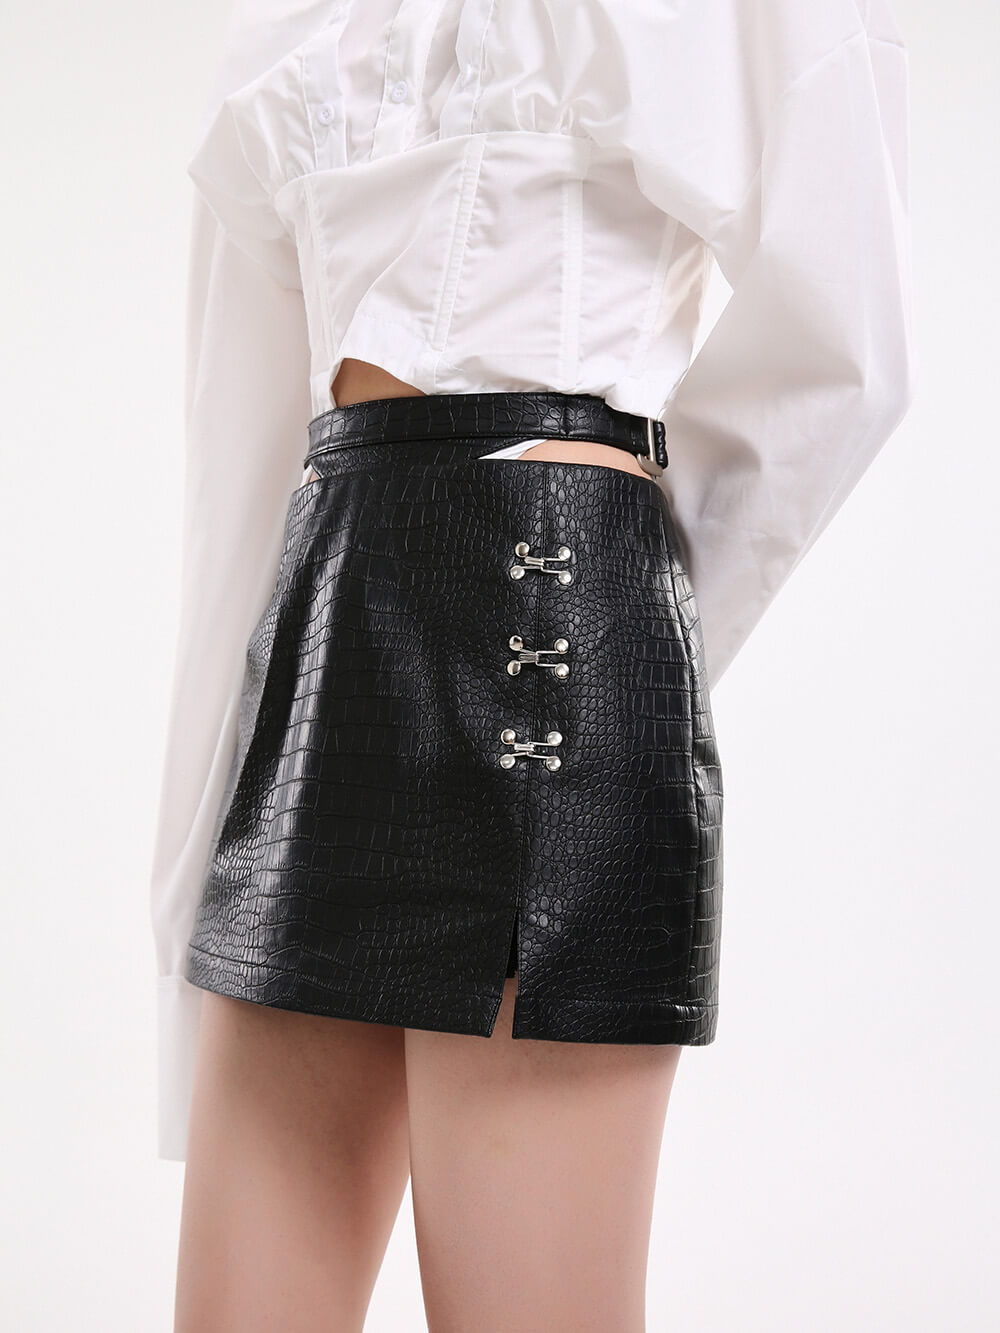 MUKZIN Black Waist Cutout Leather Skirt